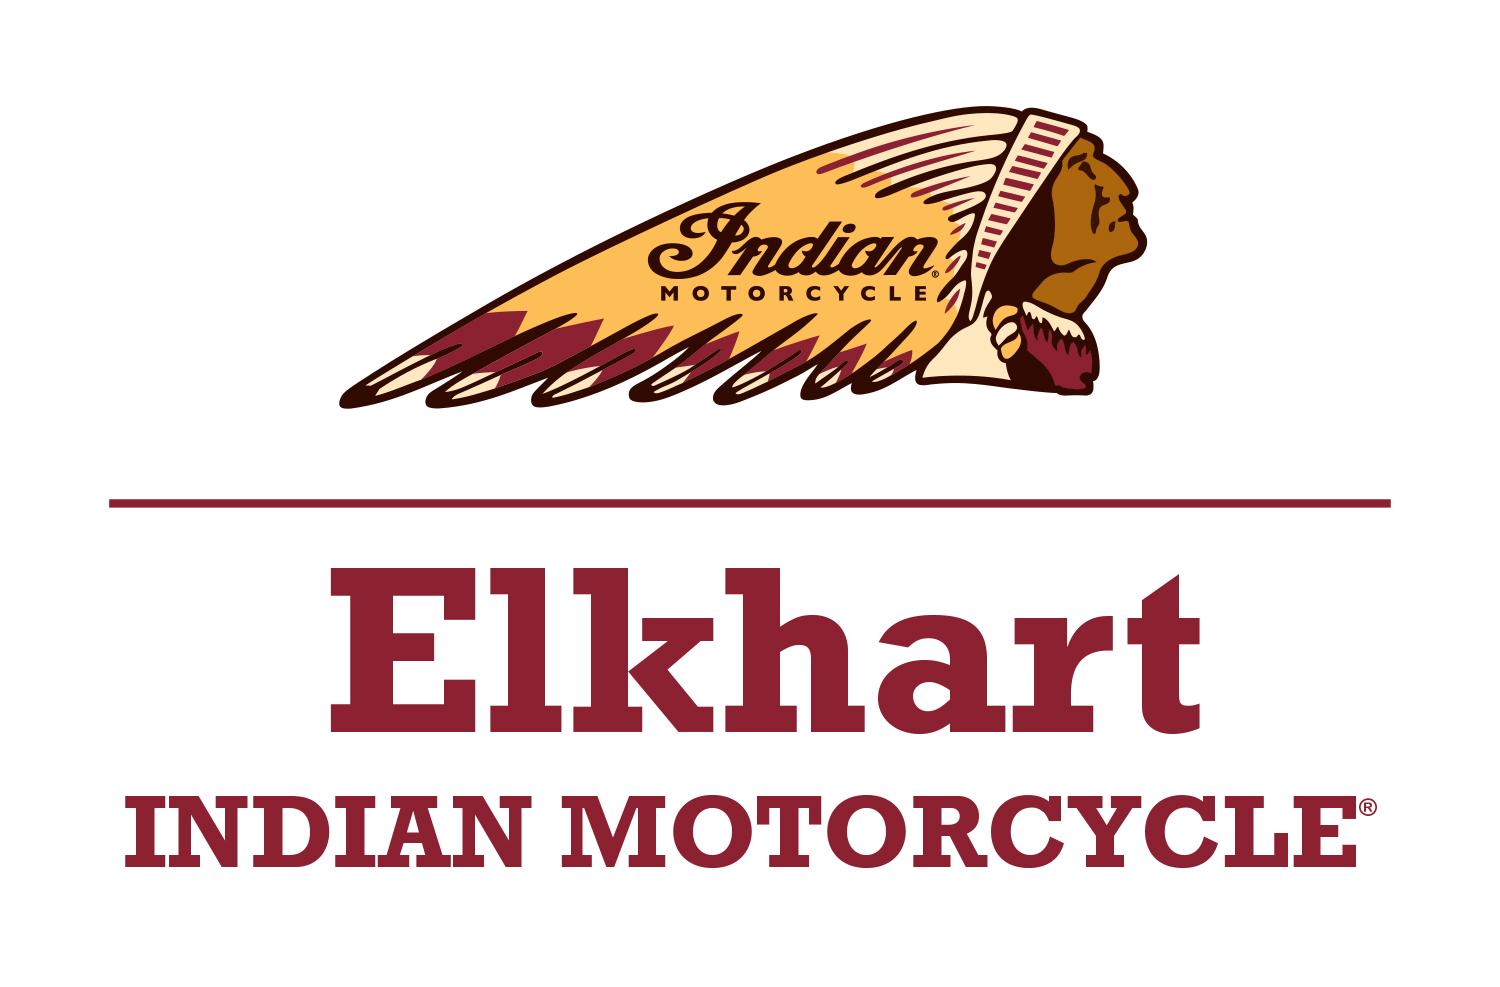 Elkhart Indian Motorcycle